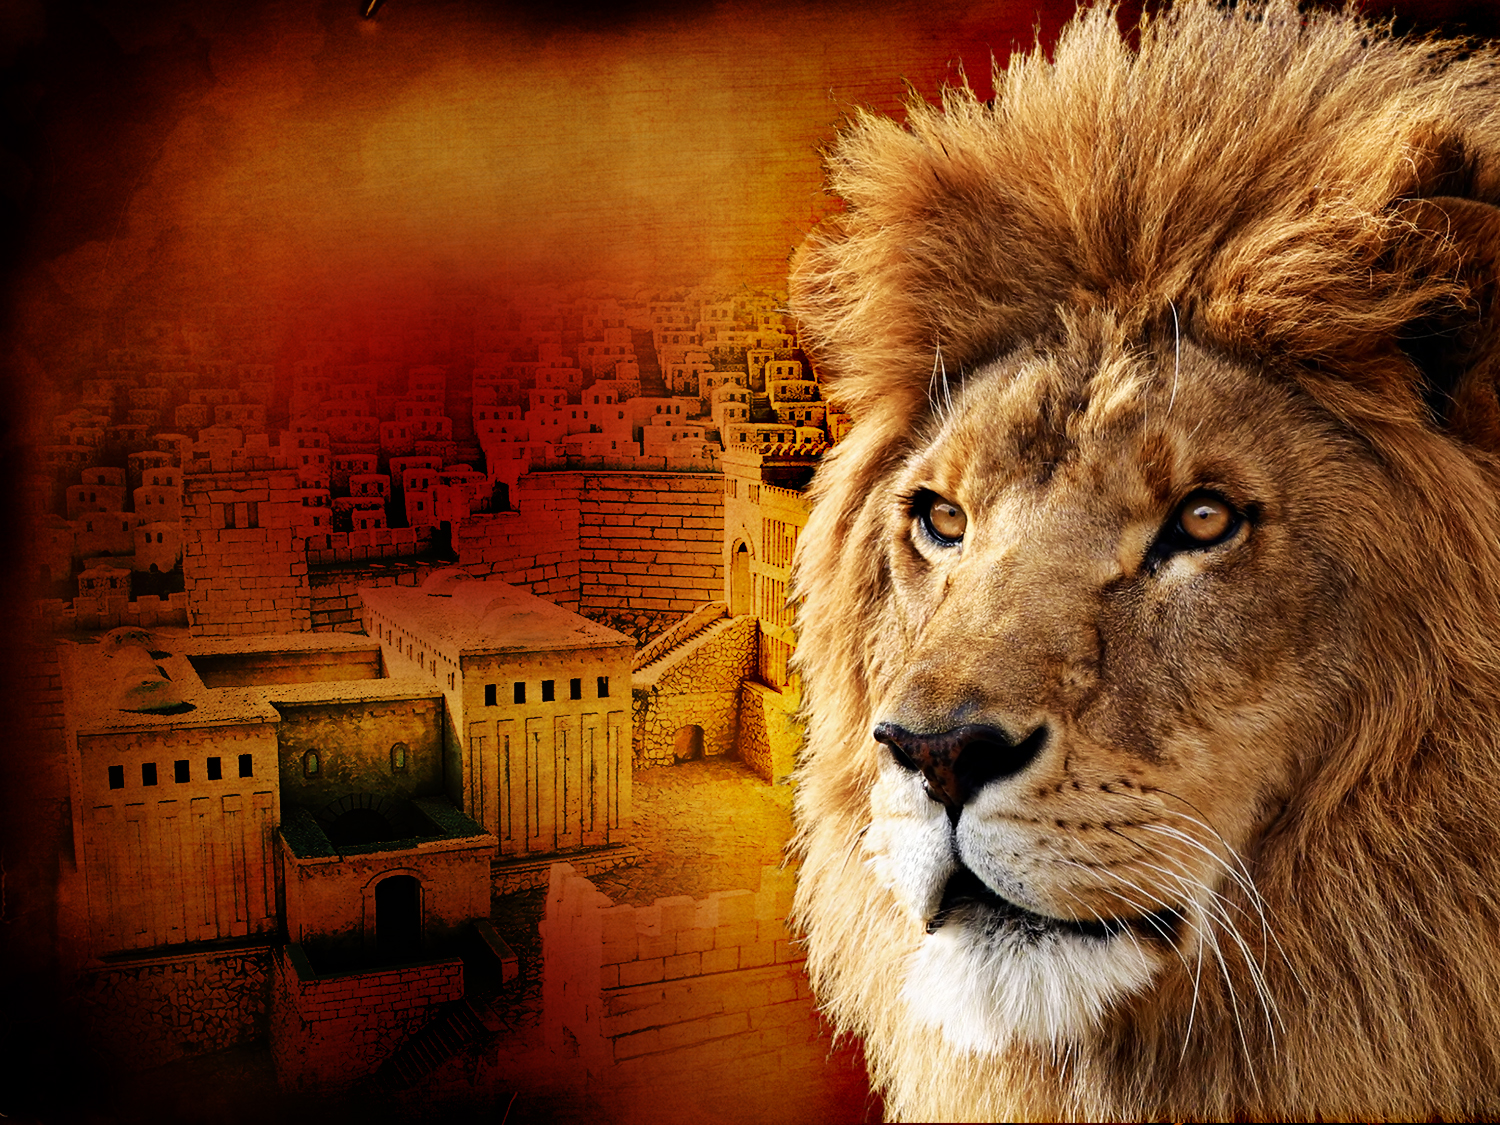 lion of judah travel